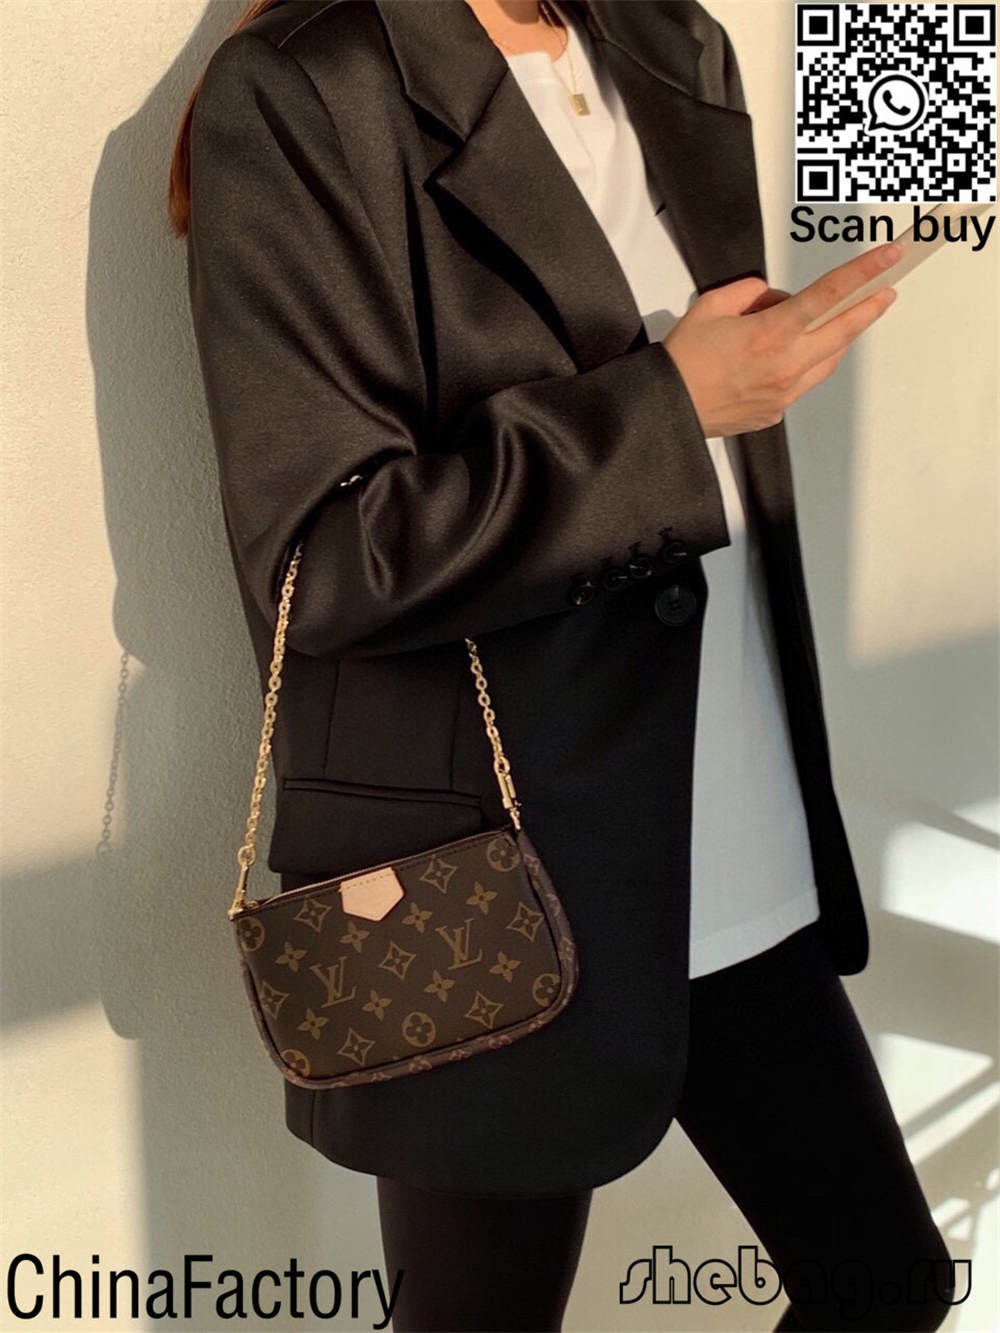 Kodi mungapeze bwanji matumba a replica pa ebay? (2022 Solutions)-Best Quality fake Louis Vuitton Bag Online Store, Replica designer bag ru